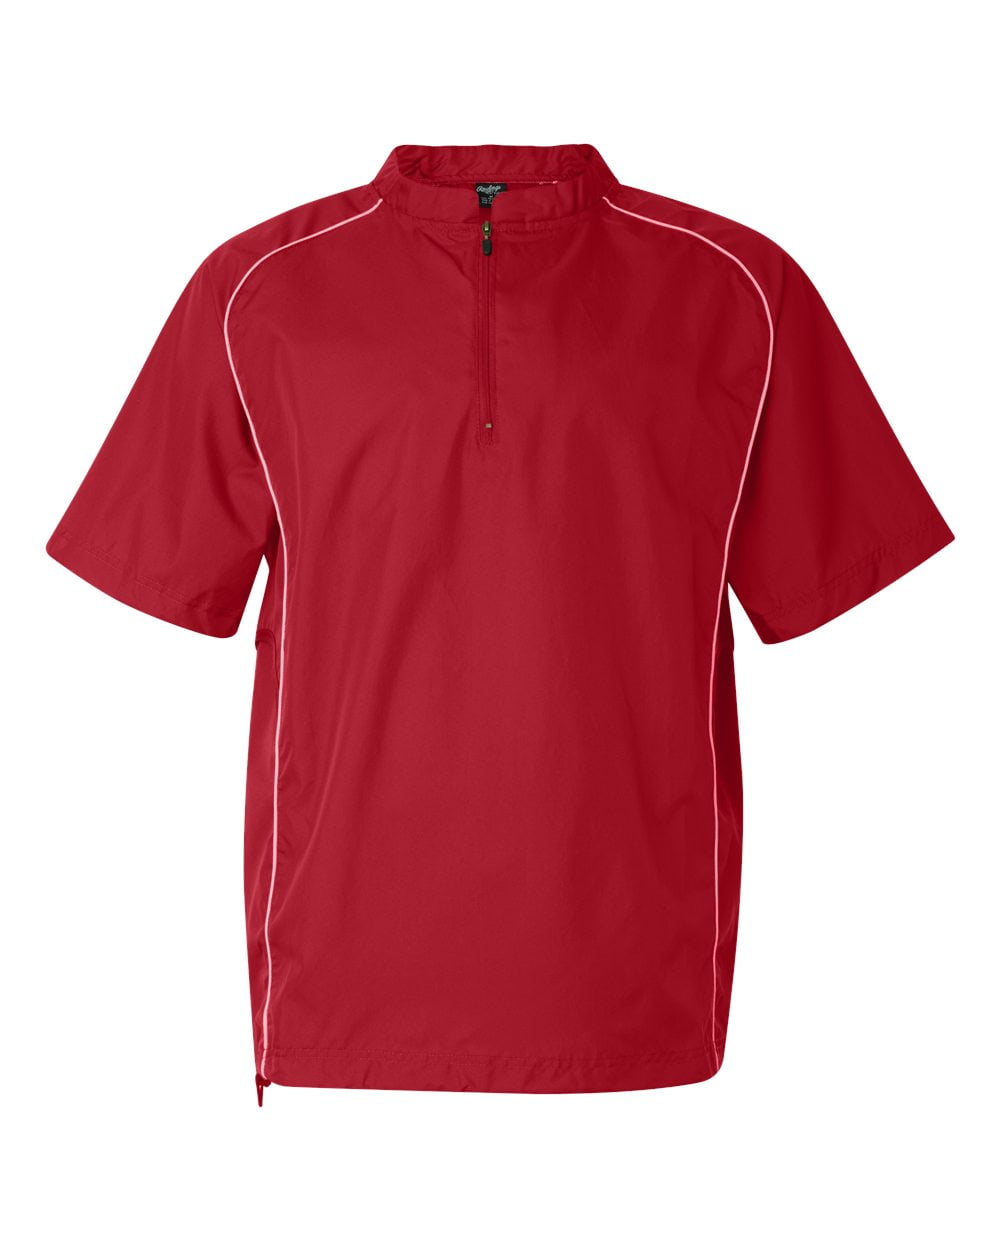 Rawlings Mens S-3XL Short Sleeve 1/4 Zip Baseball Pullover Wind Shirt Jacket Top 